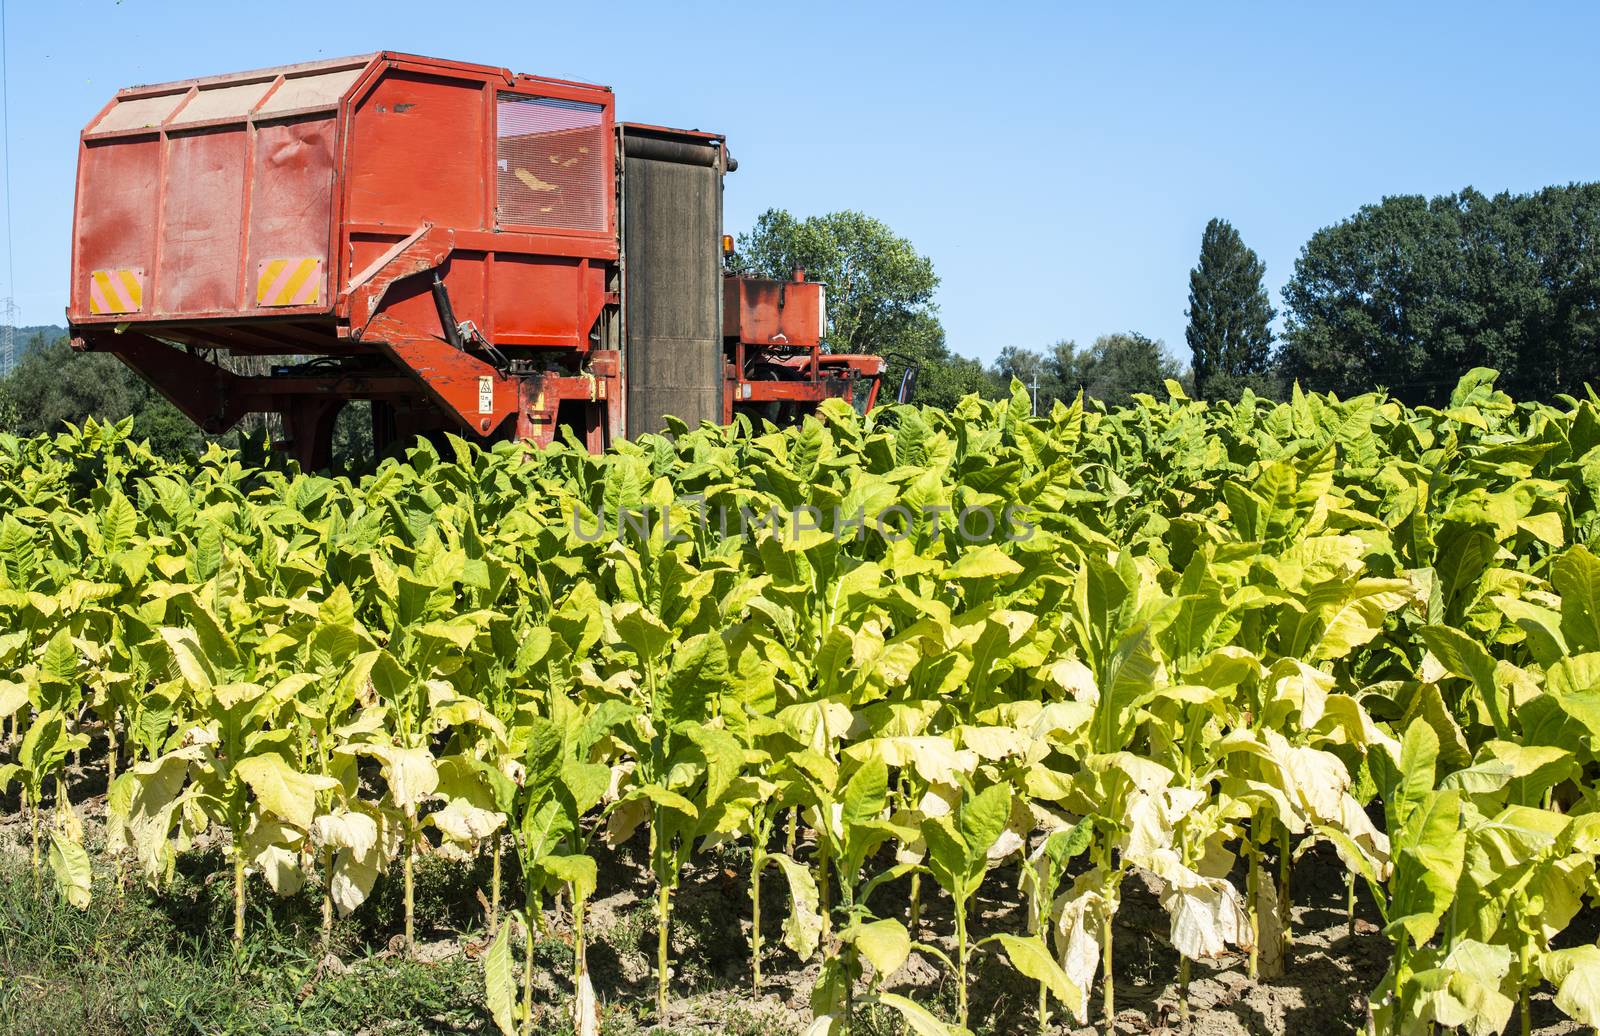 Harvesting tobacco leaves with harvester tractor by deyan_georgiev